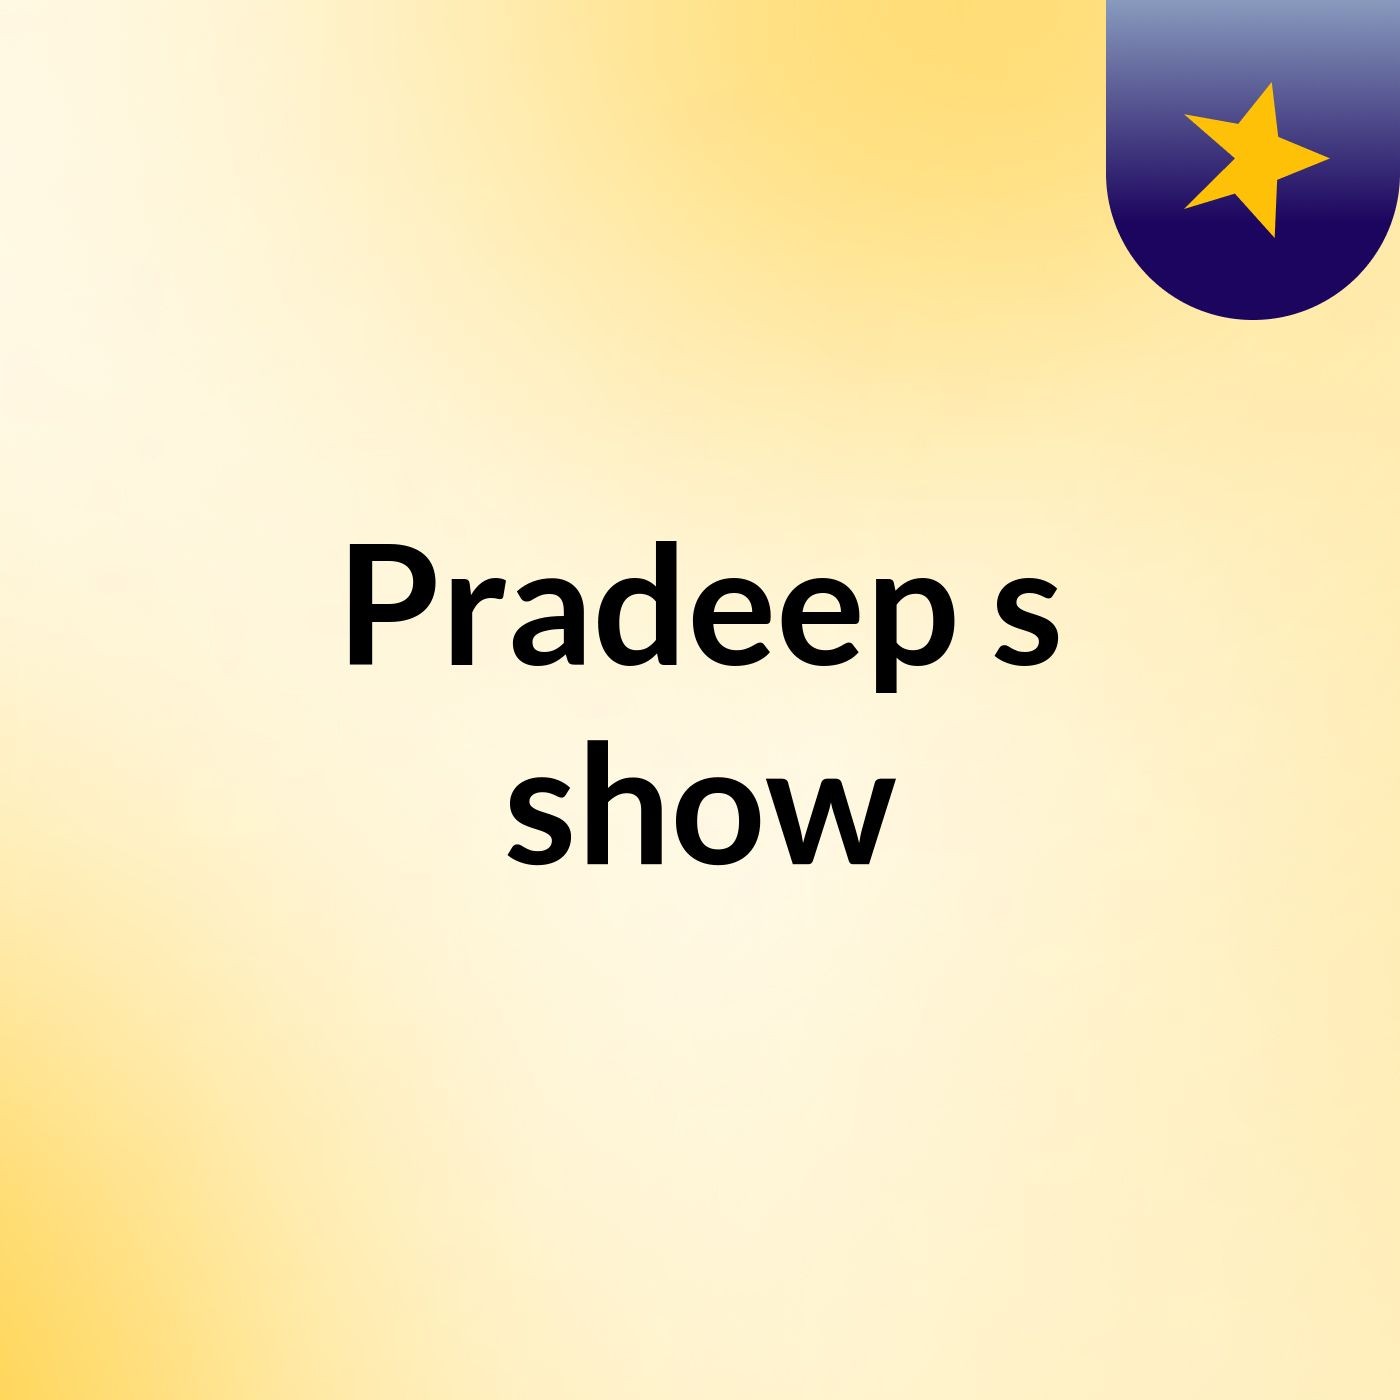 Pradeep's show